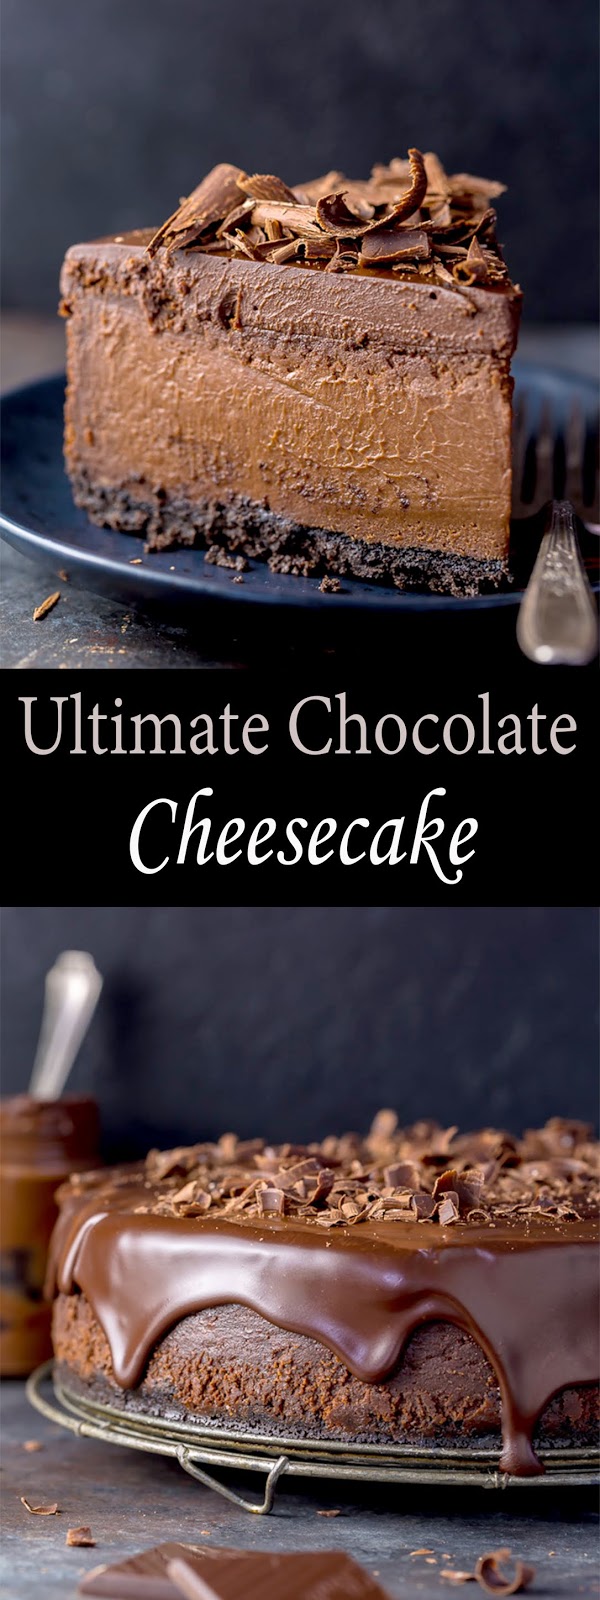 Ultimate Chocolate Cheesecake | BANK HEALTHY